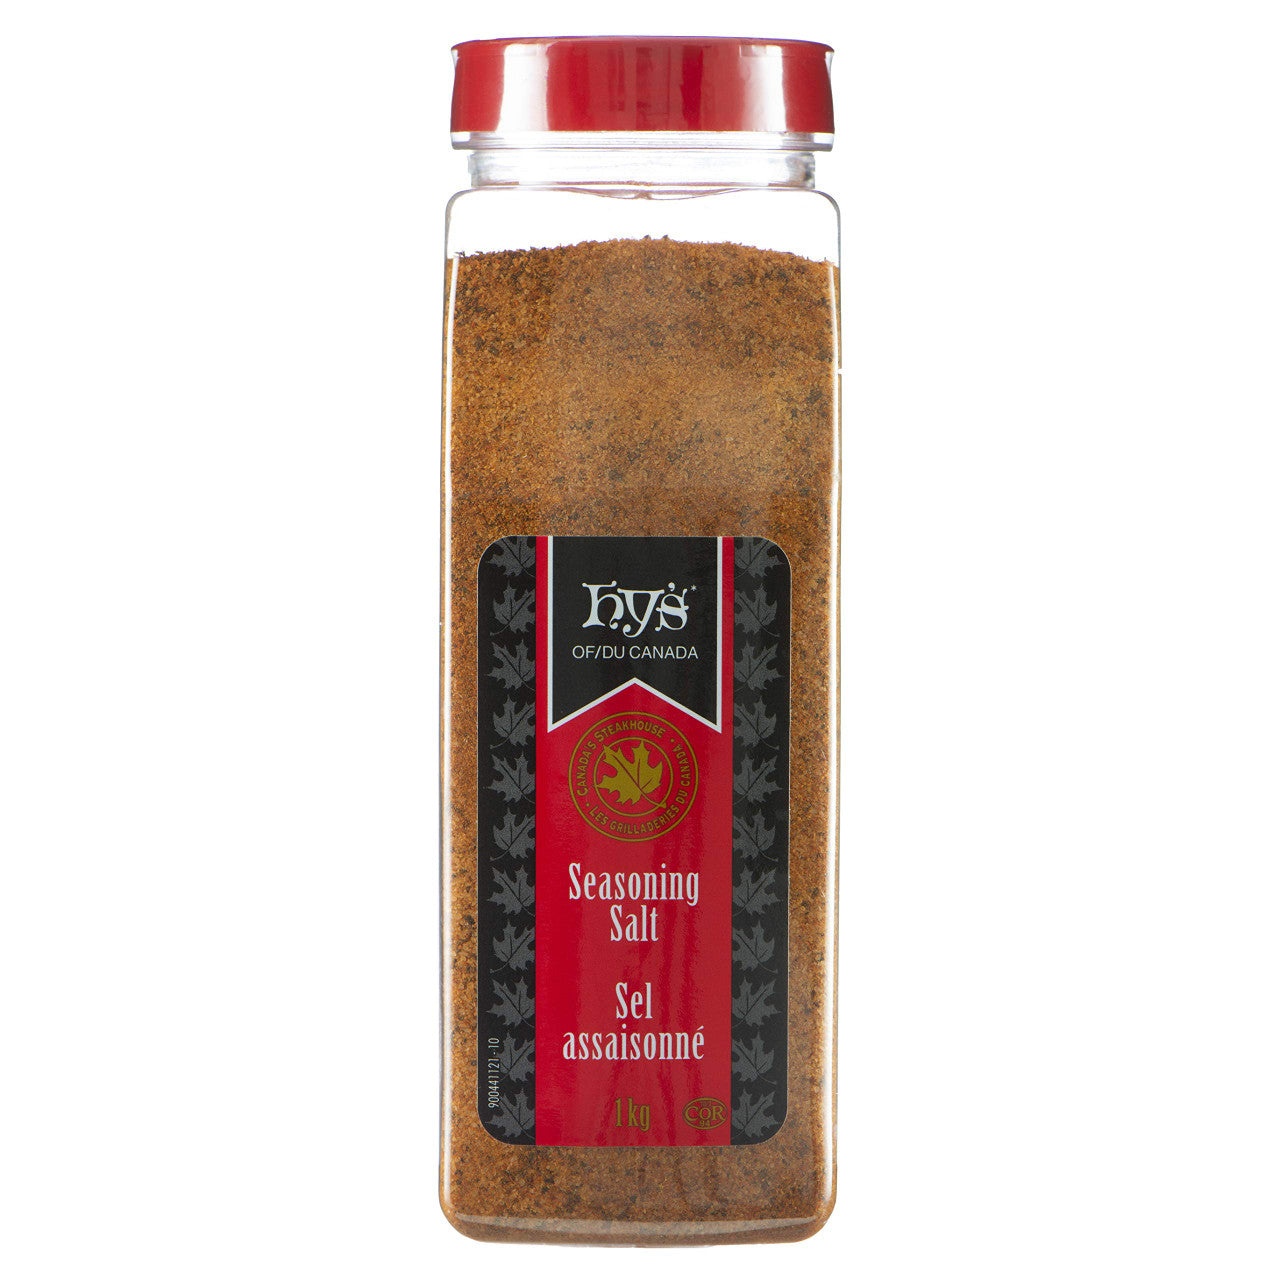 Hy's Seasoning Salt, 1 Kilograms/35.27oz {Imported from Canada}